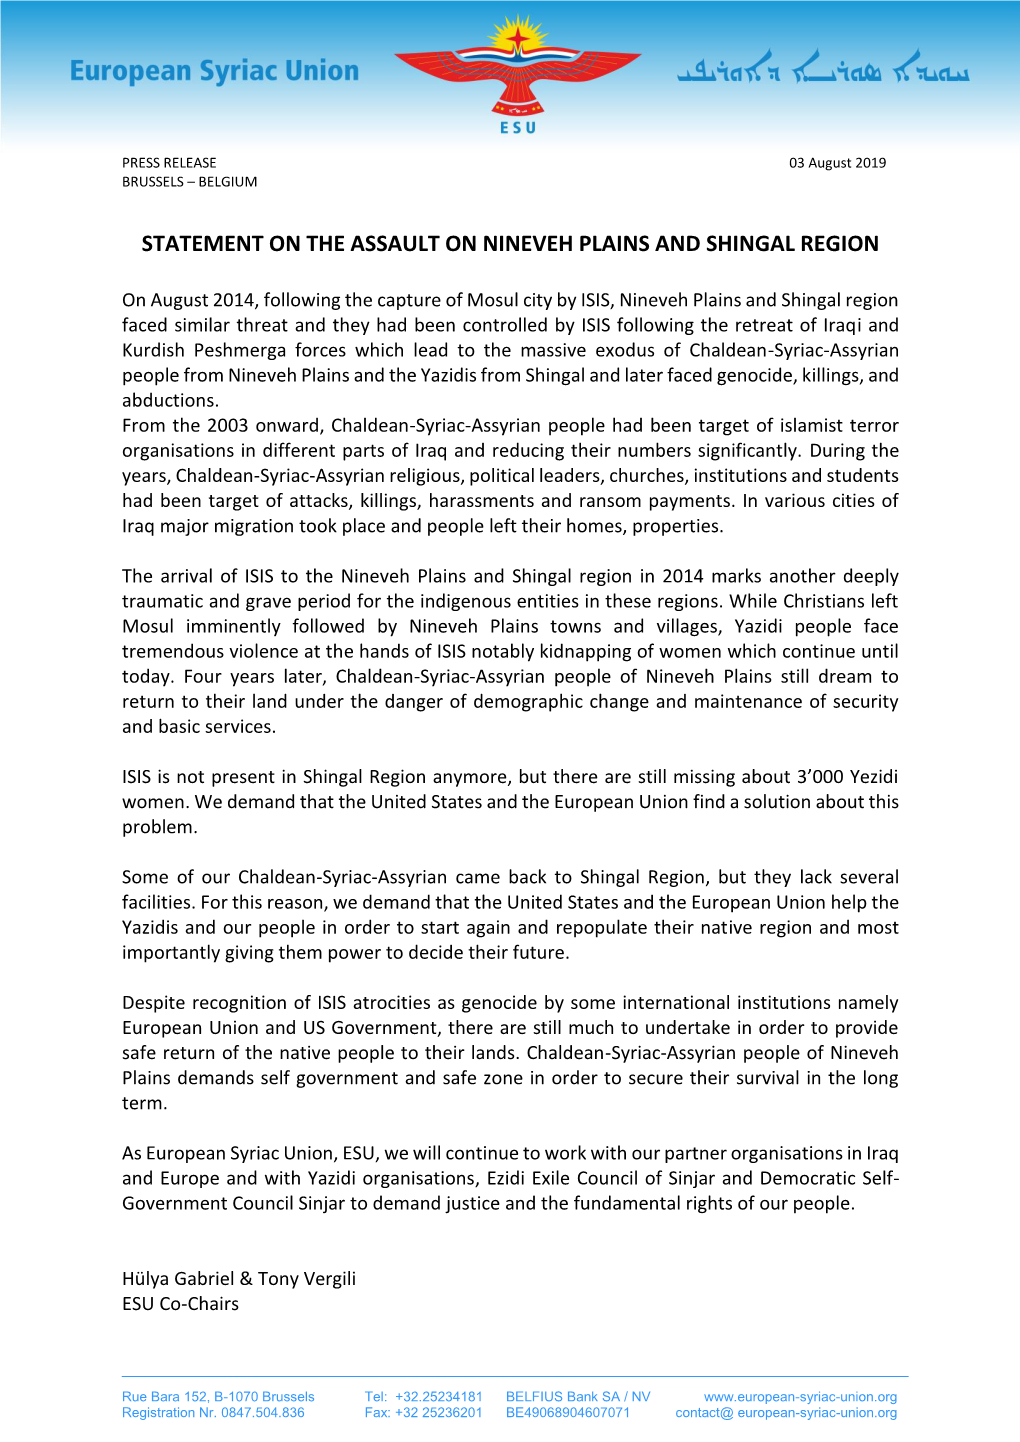 Statement on the Assault on Nineveh Plains and Shingal Region